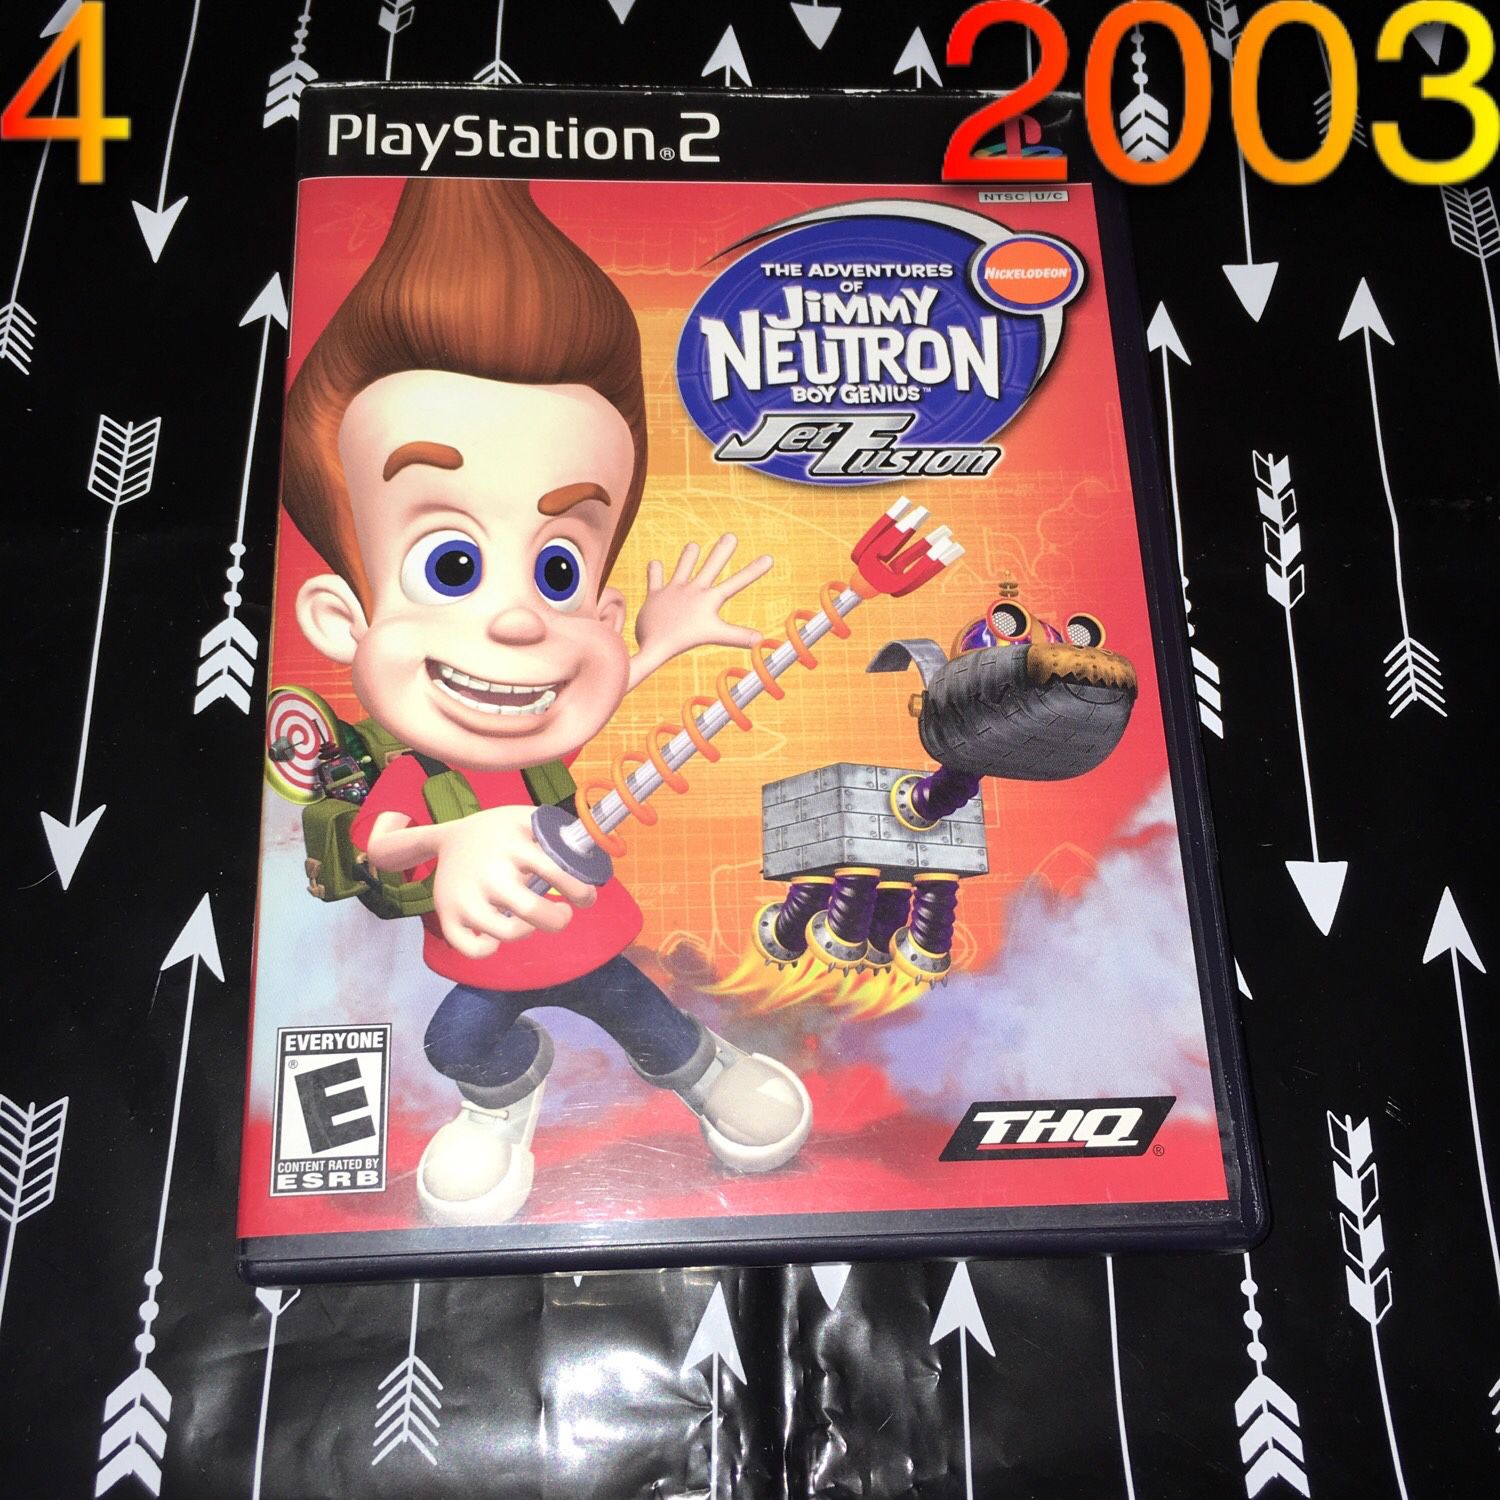 2003 PS2 Jimmy Neutron Jet Fusion game